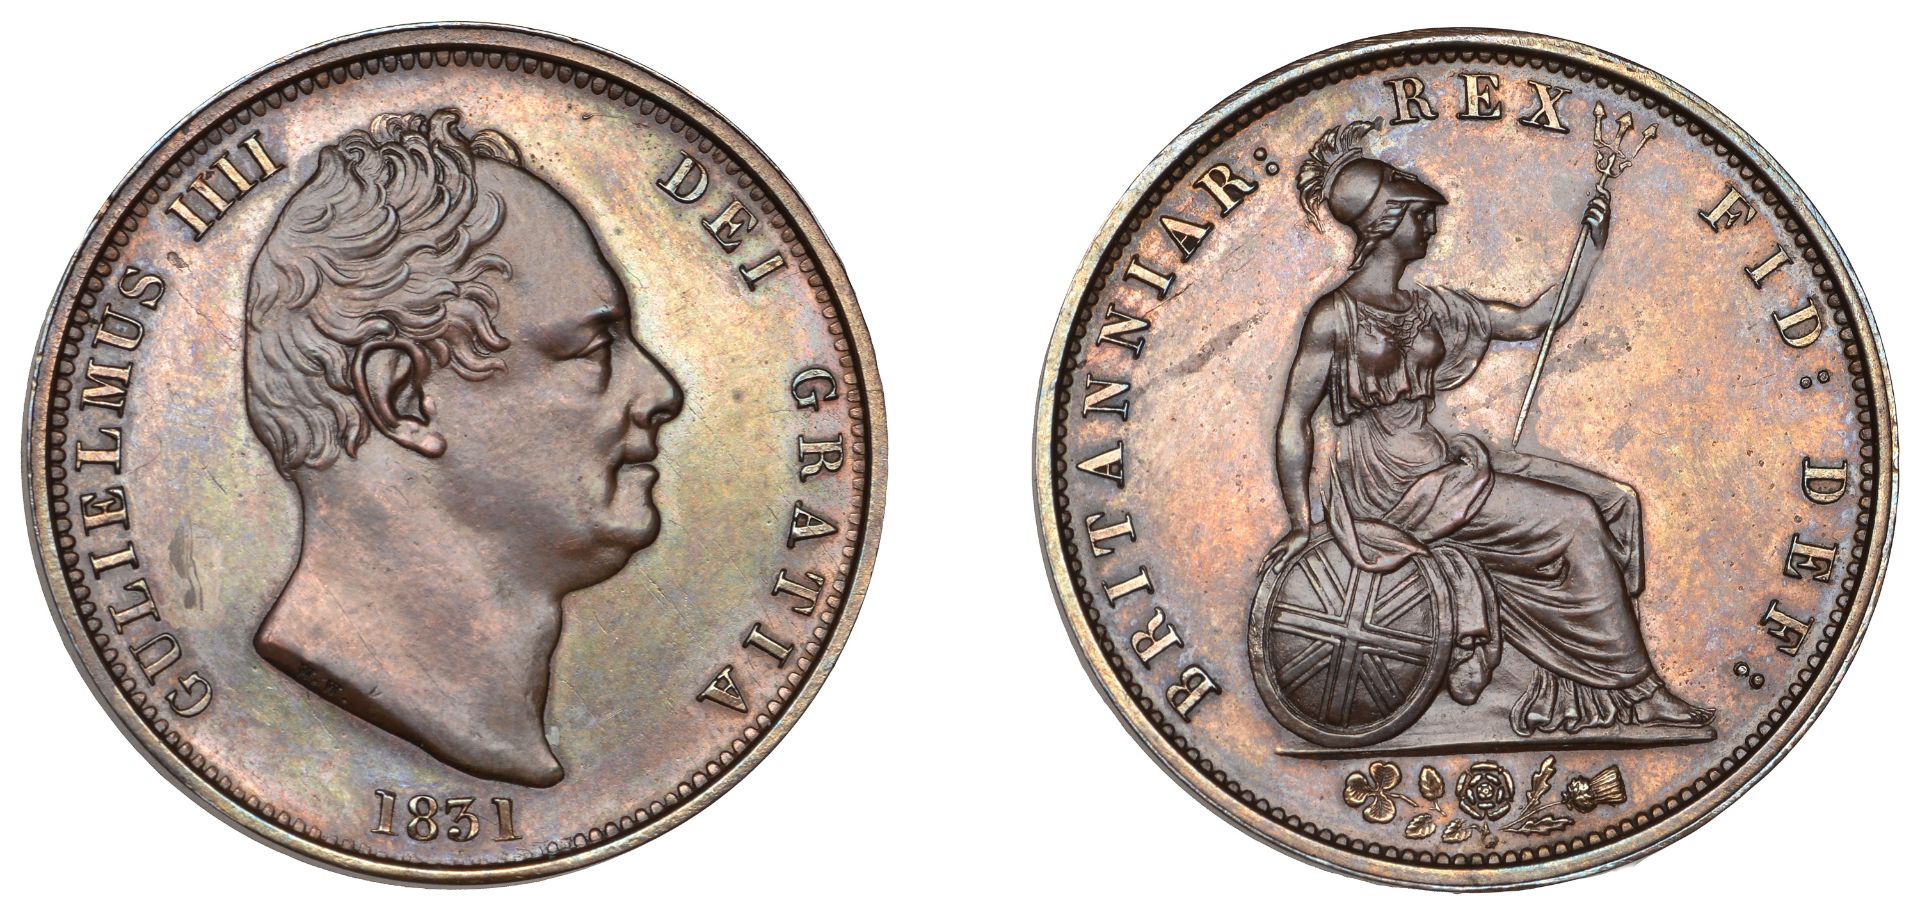 William IV (1830-1837), Proof Halfpenny, 1831, bronzed, edge plain, 9.63g/6h (BMC 1462; S 38...